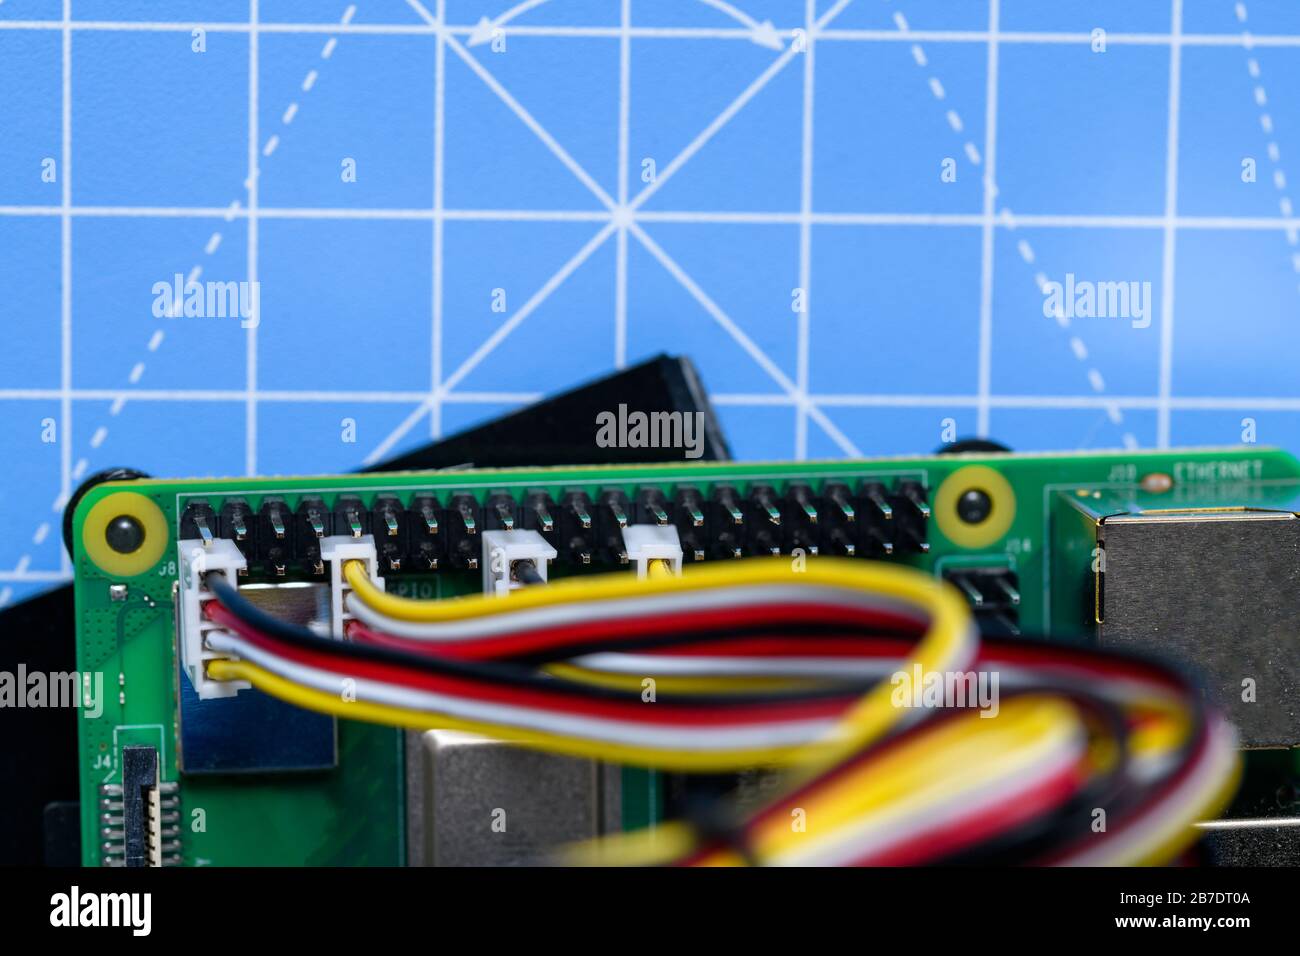 Primer plano de la placa de circuitos con cables conectados sobre un fondo  azul. Concepto de electrónica, ciencia, tecnología, hobby o educación  Fotografía de stock - Alamy